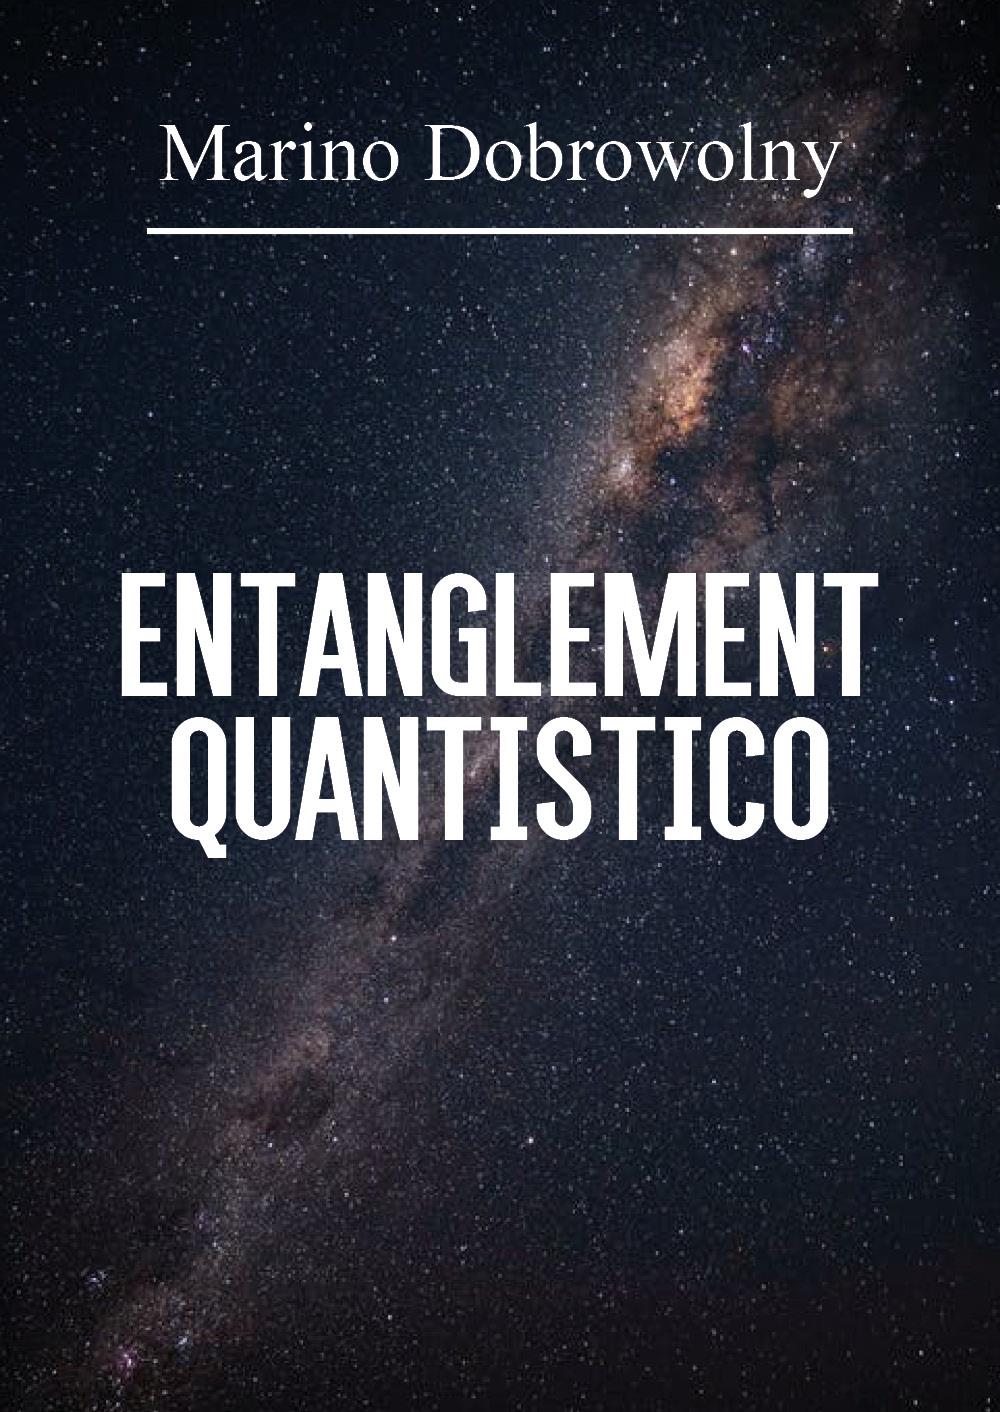 Entanglement quantistico